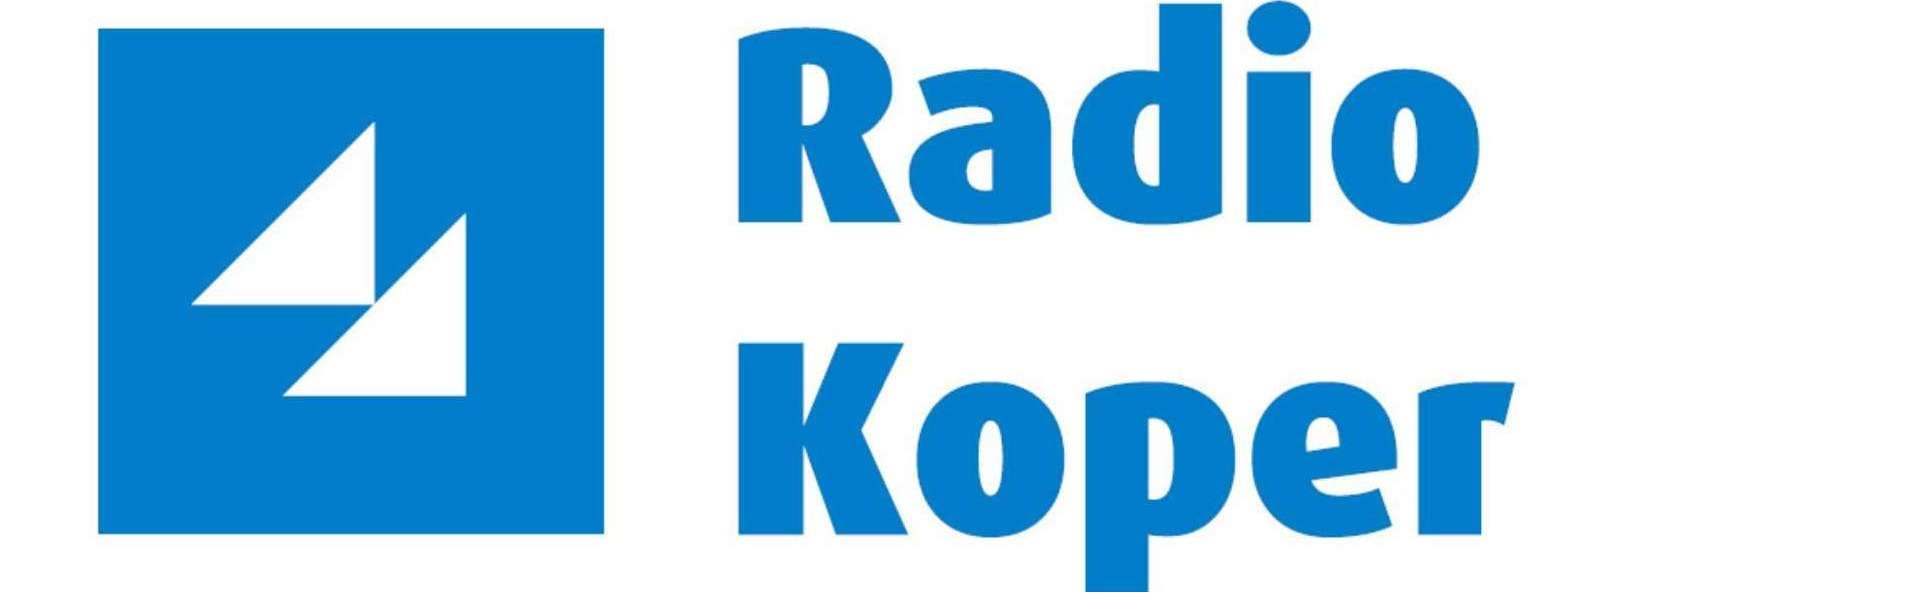 Radio Slovenija, Radio Koper.